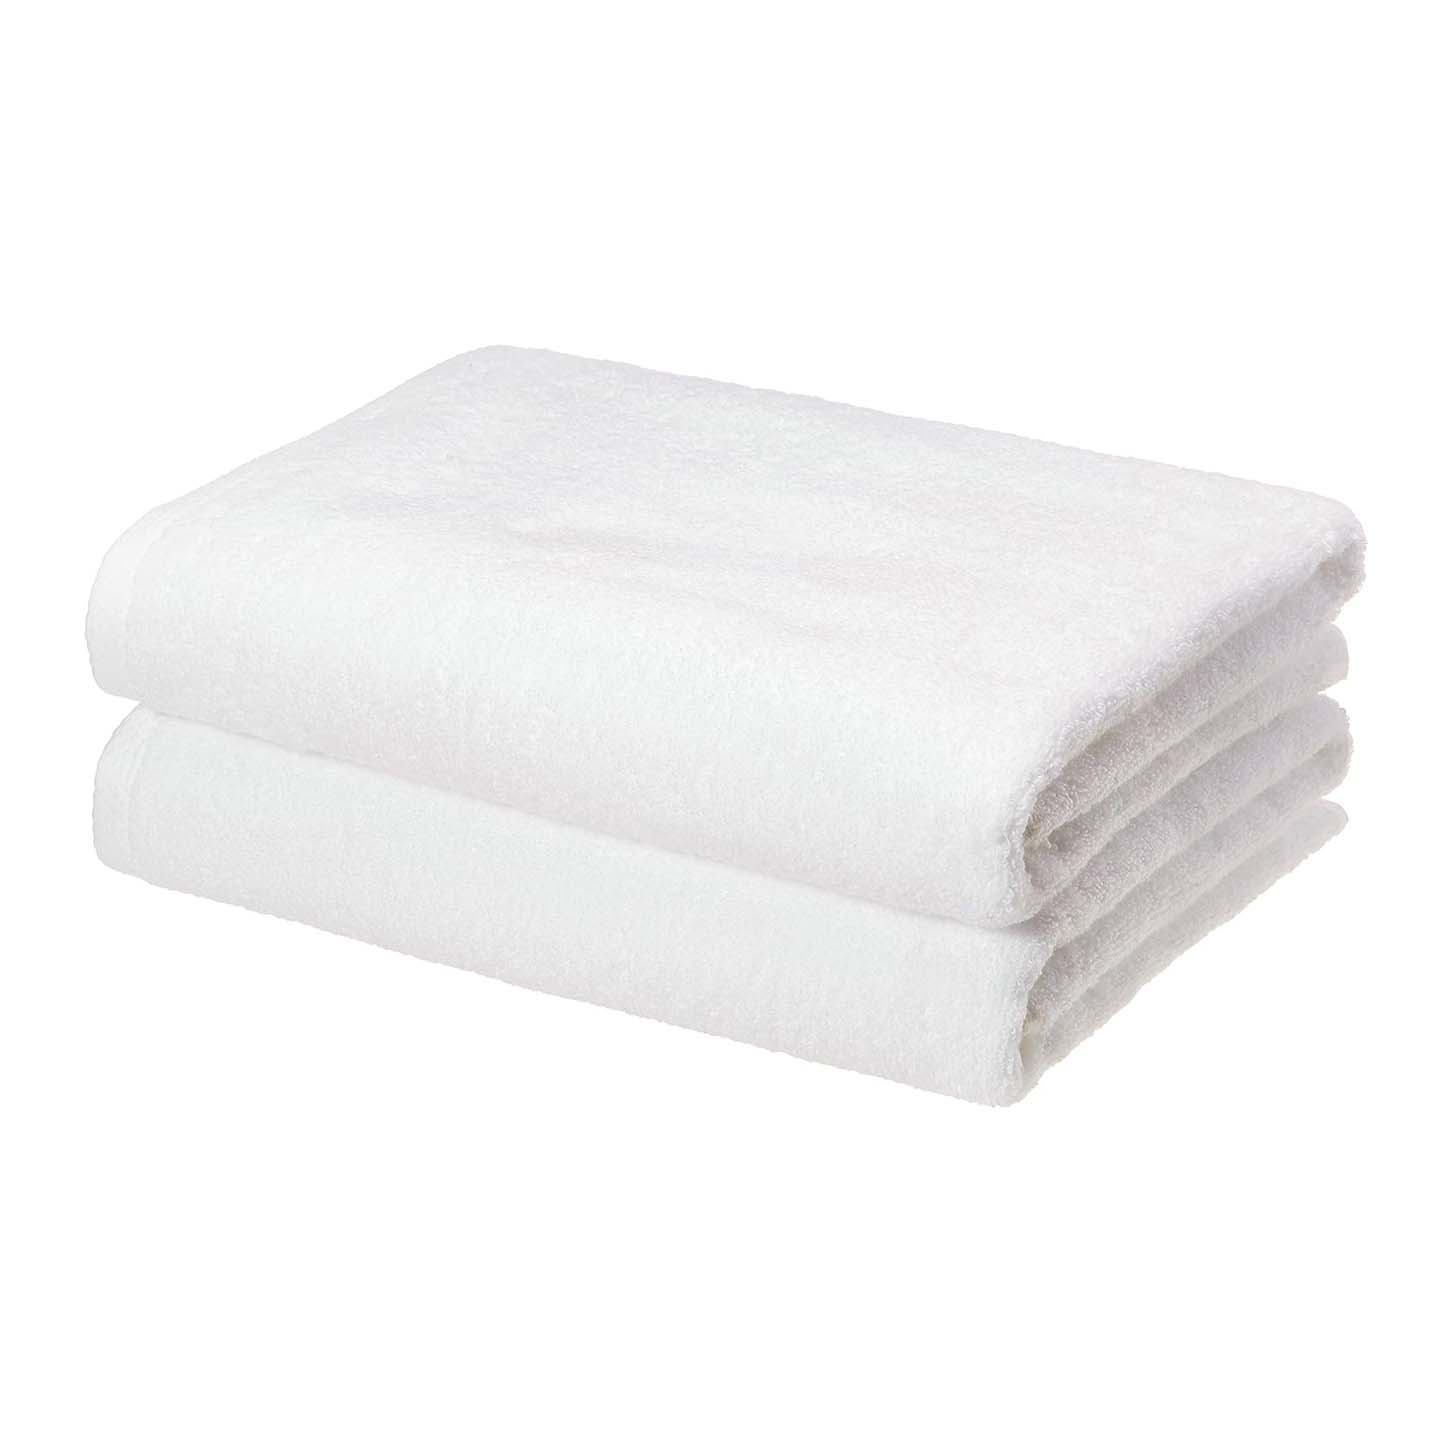 Amazon Basics 2 Piece Quick-Dry Oversize Bath Towels in white 